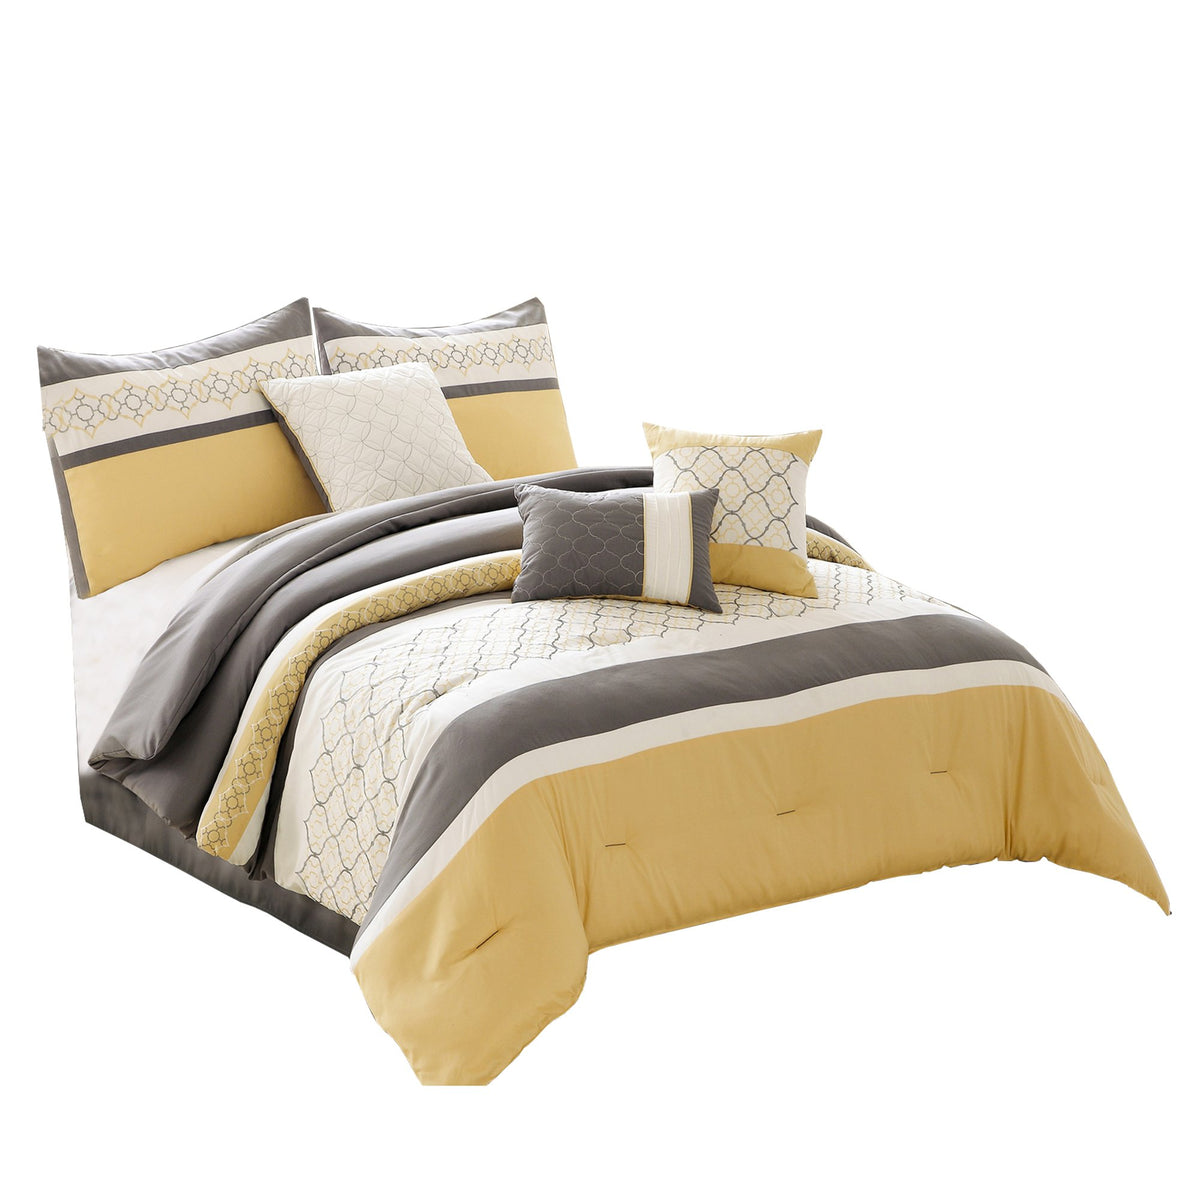 Quatrefoil Print Queen Size 7 Piece Fabric Comforter Set, Yellow and Gray - BM225208